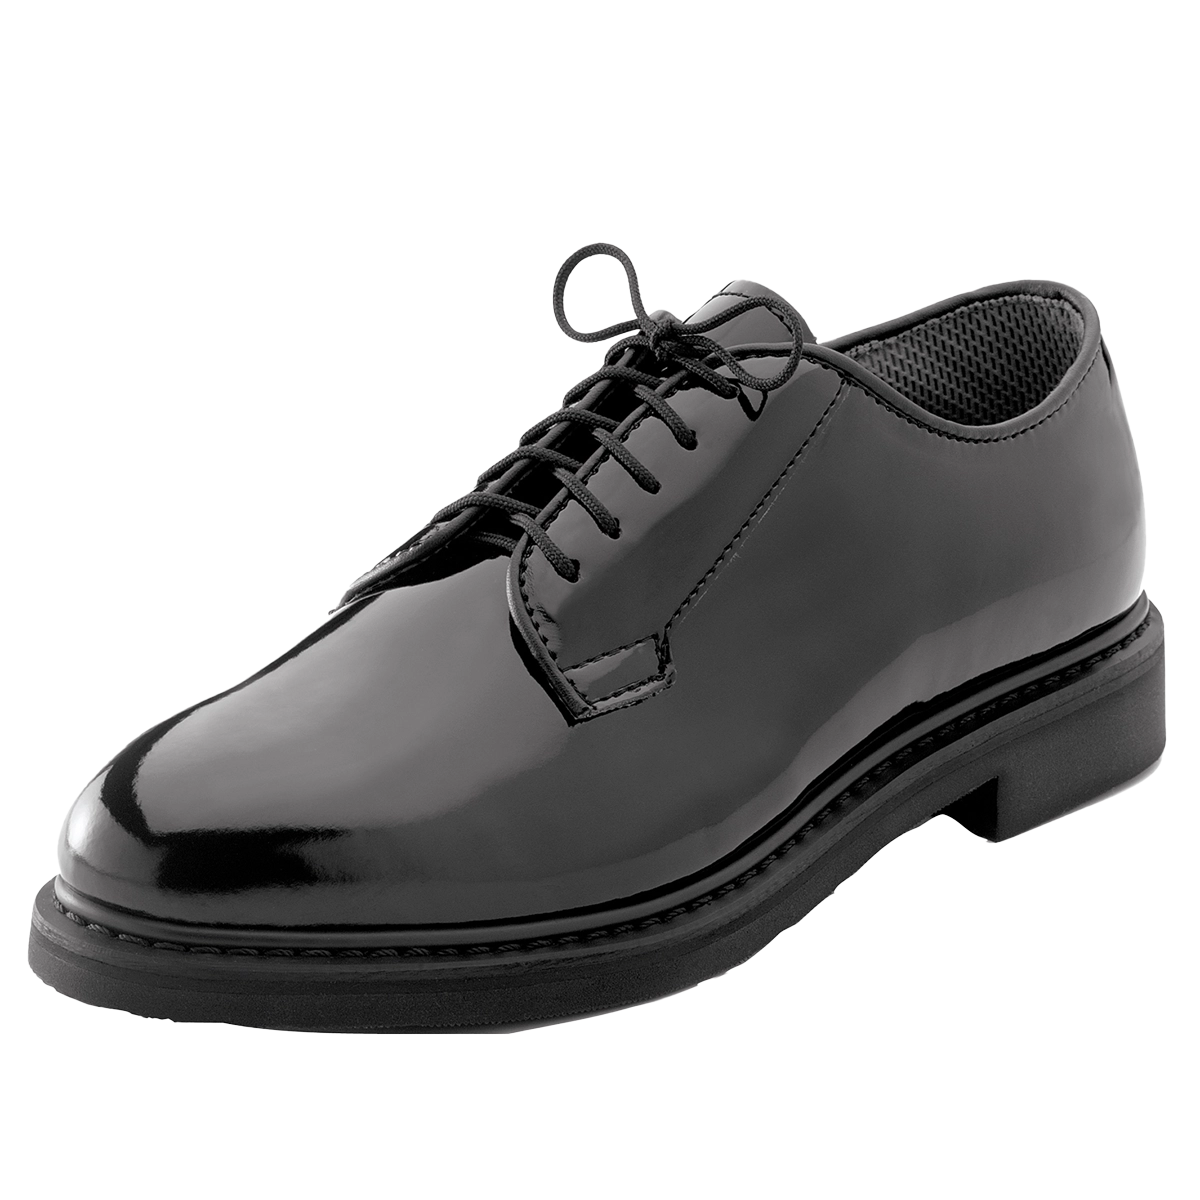 Rothco Shoe, Uniform Hi-Gloss Oxford, Black 